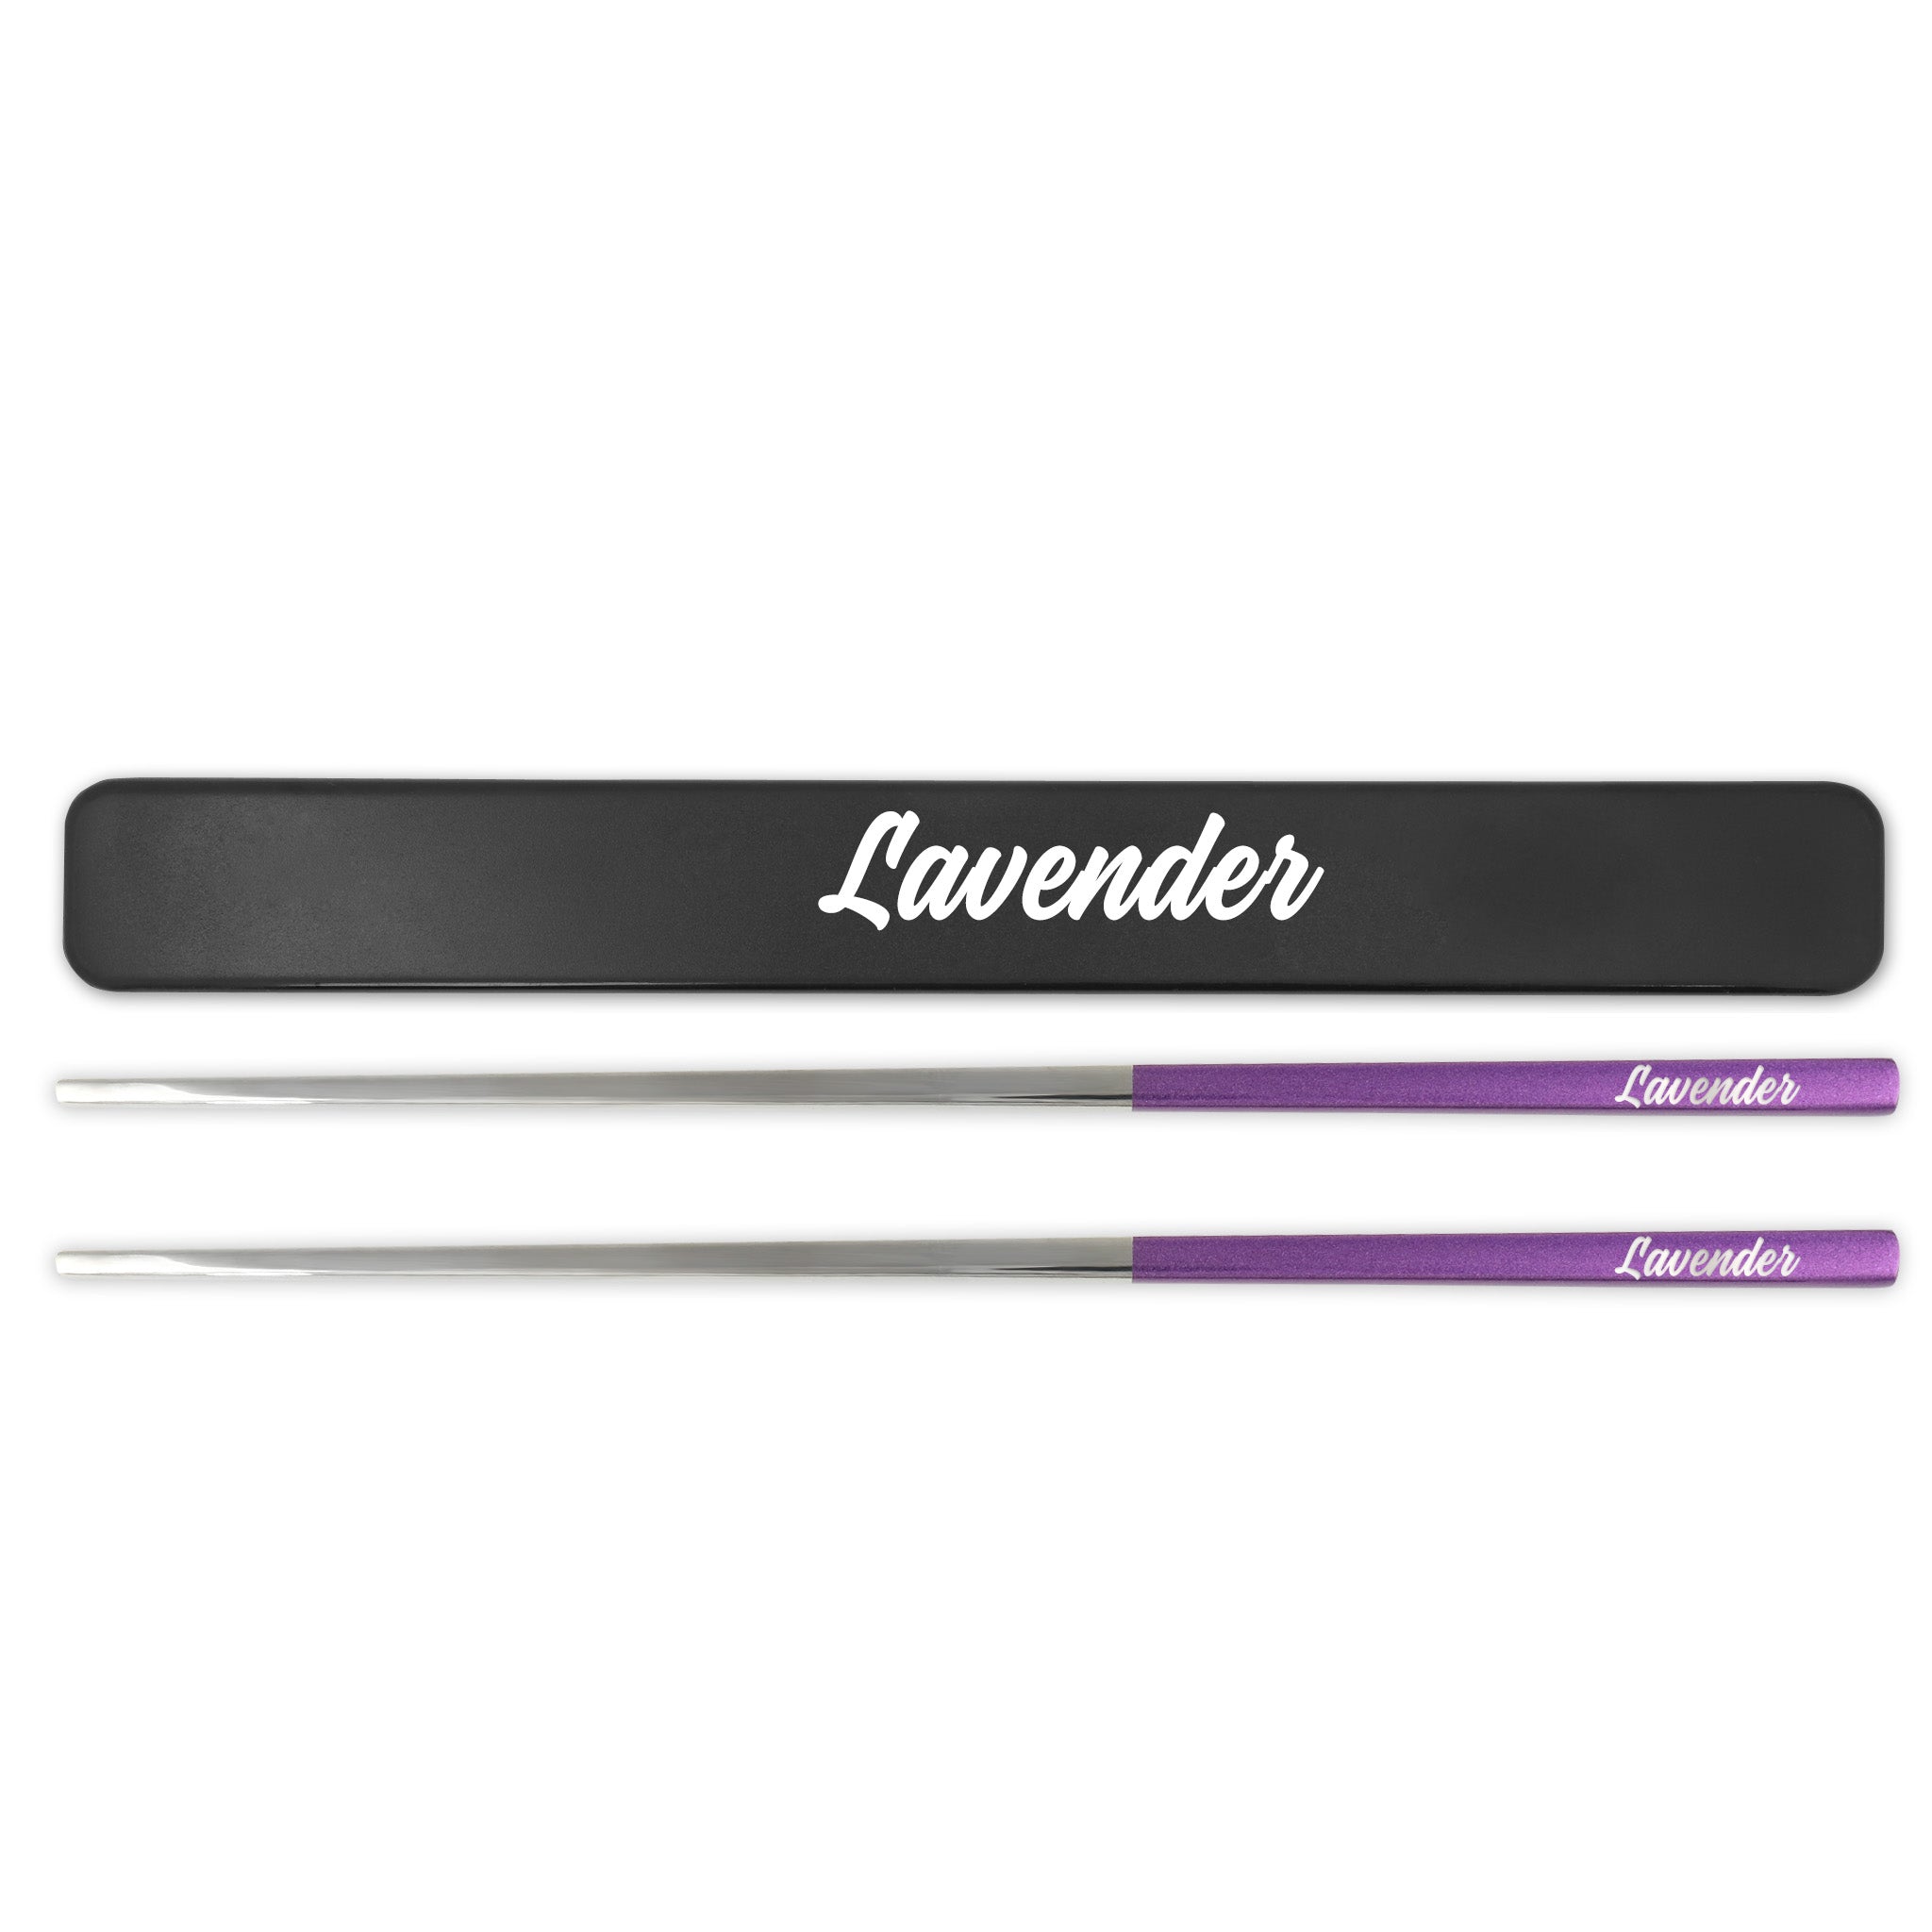 Stainless Steel Reusable Chopsticks Set (Lavender / Silver)